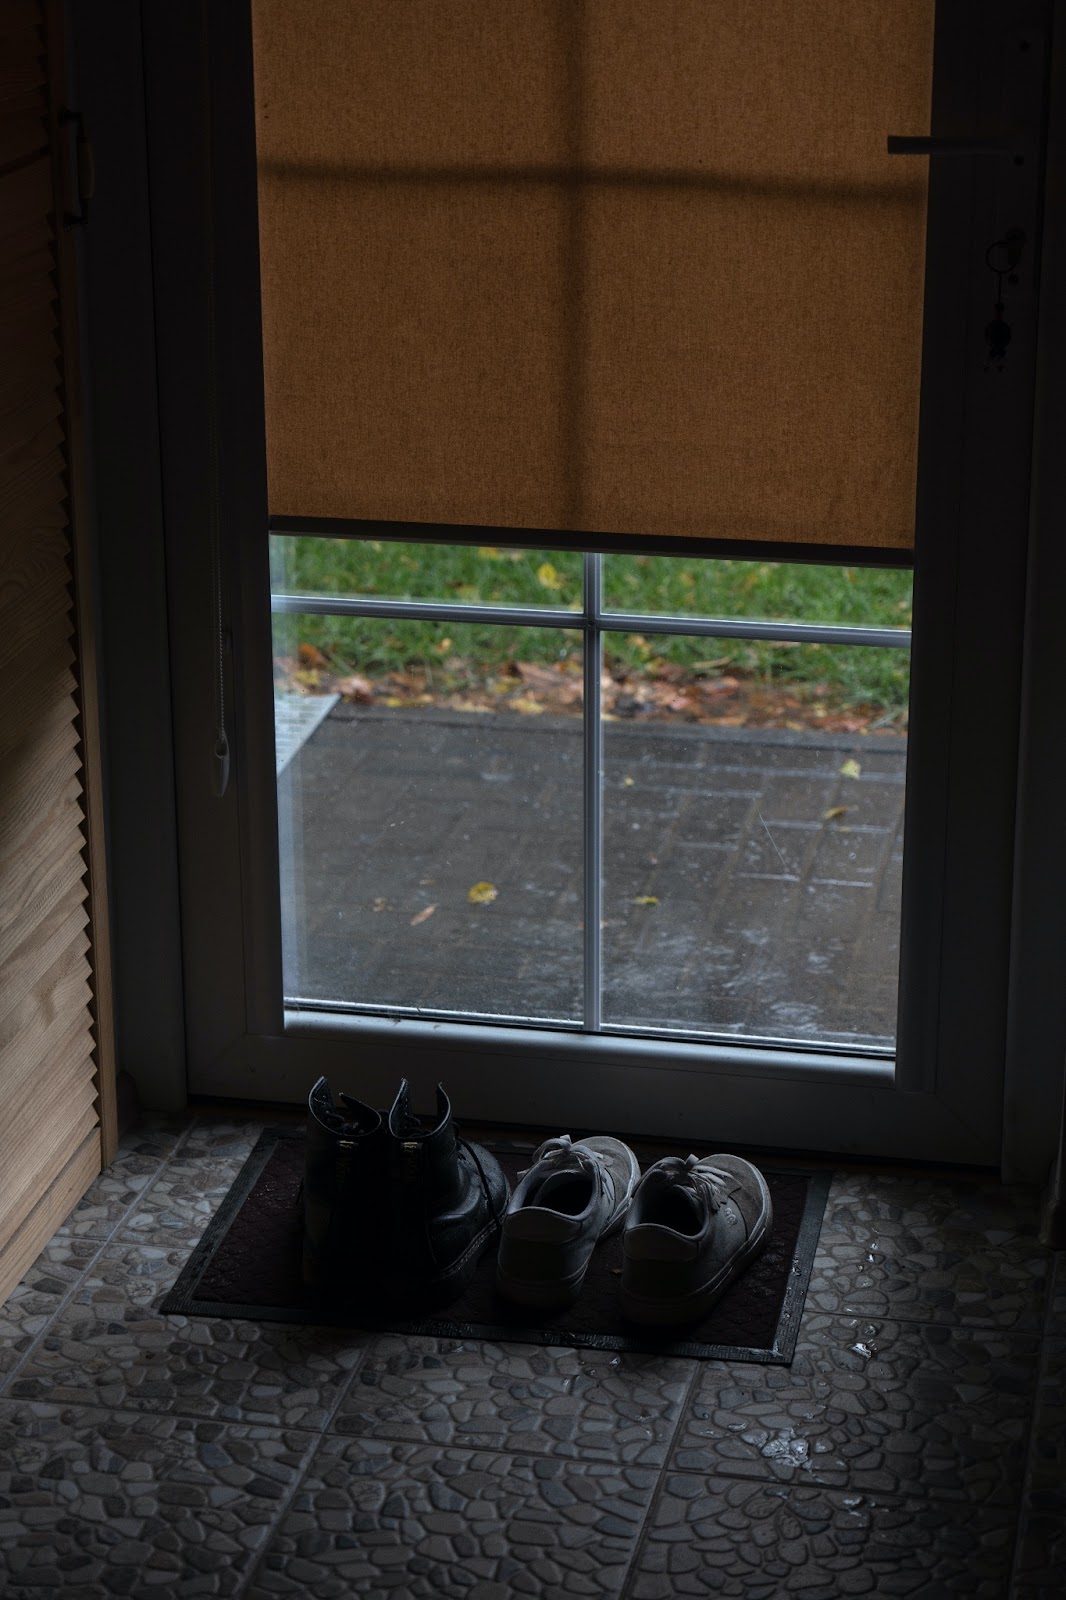 Shoes by the door